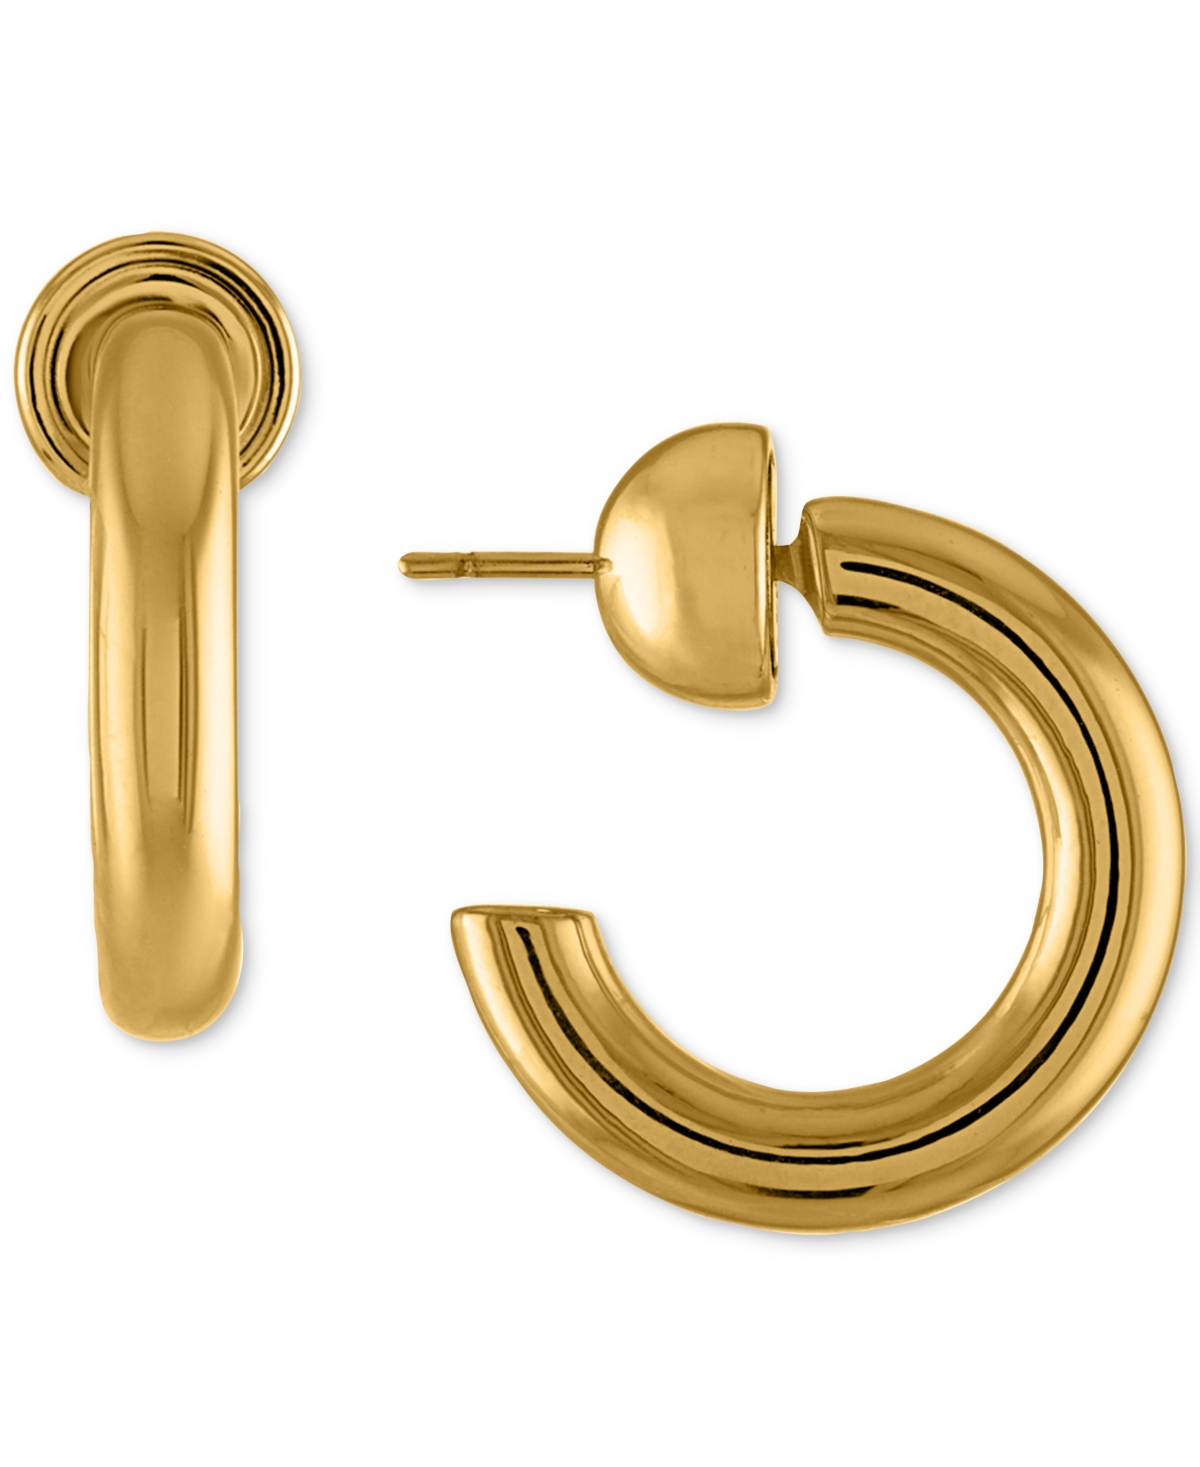 18k Gold-Plated Medium C-Hoop Earrings, 1.18" - Gold